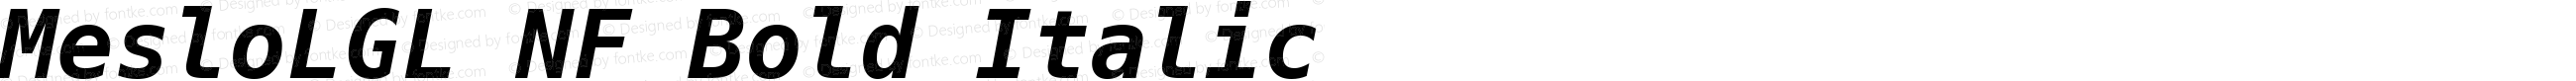 Meslo LG L Bold Italic Nerd Font Complete Windows Compatible